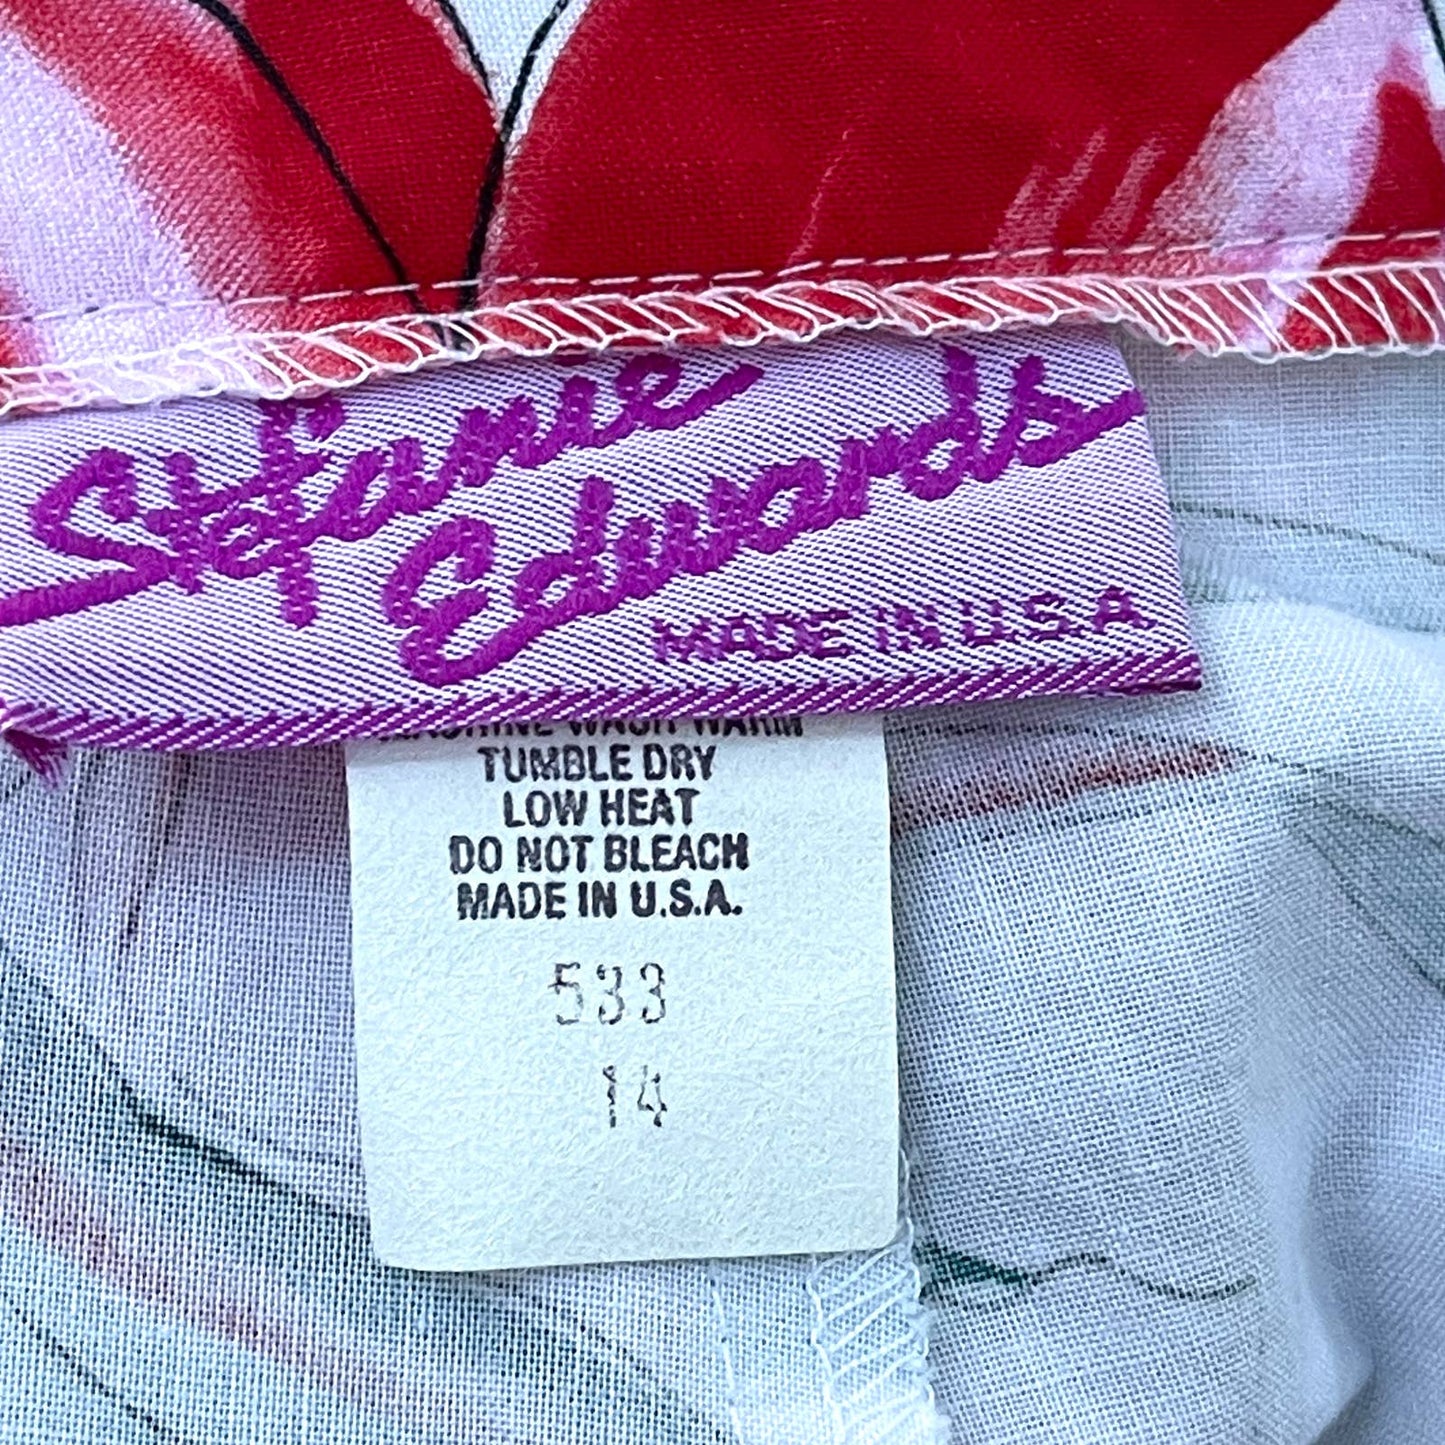 Vintage 80s White Floral High Waisted Cotton Shorts Tropical Stefanie Edwards 14